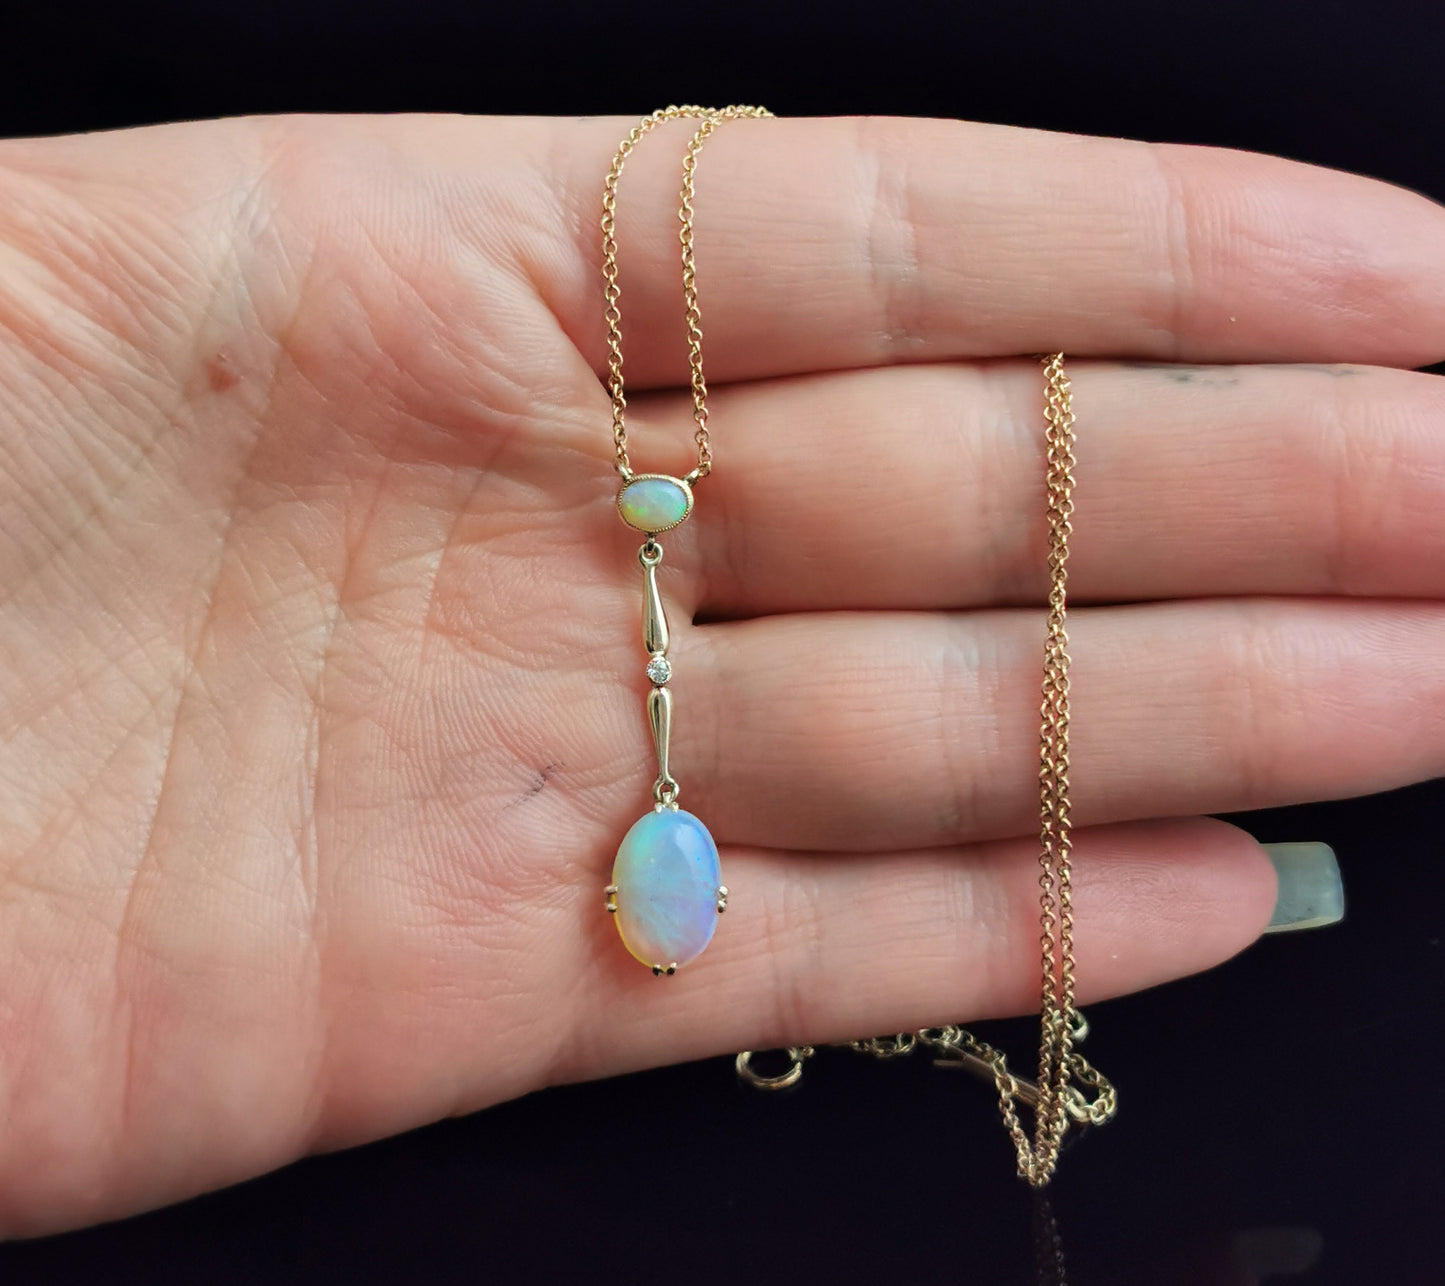 Antique Opal and Diamond drop pendant necklace, 9ct gold